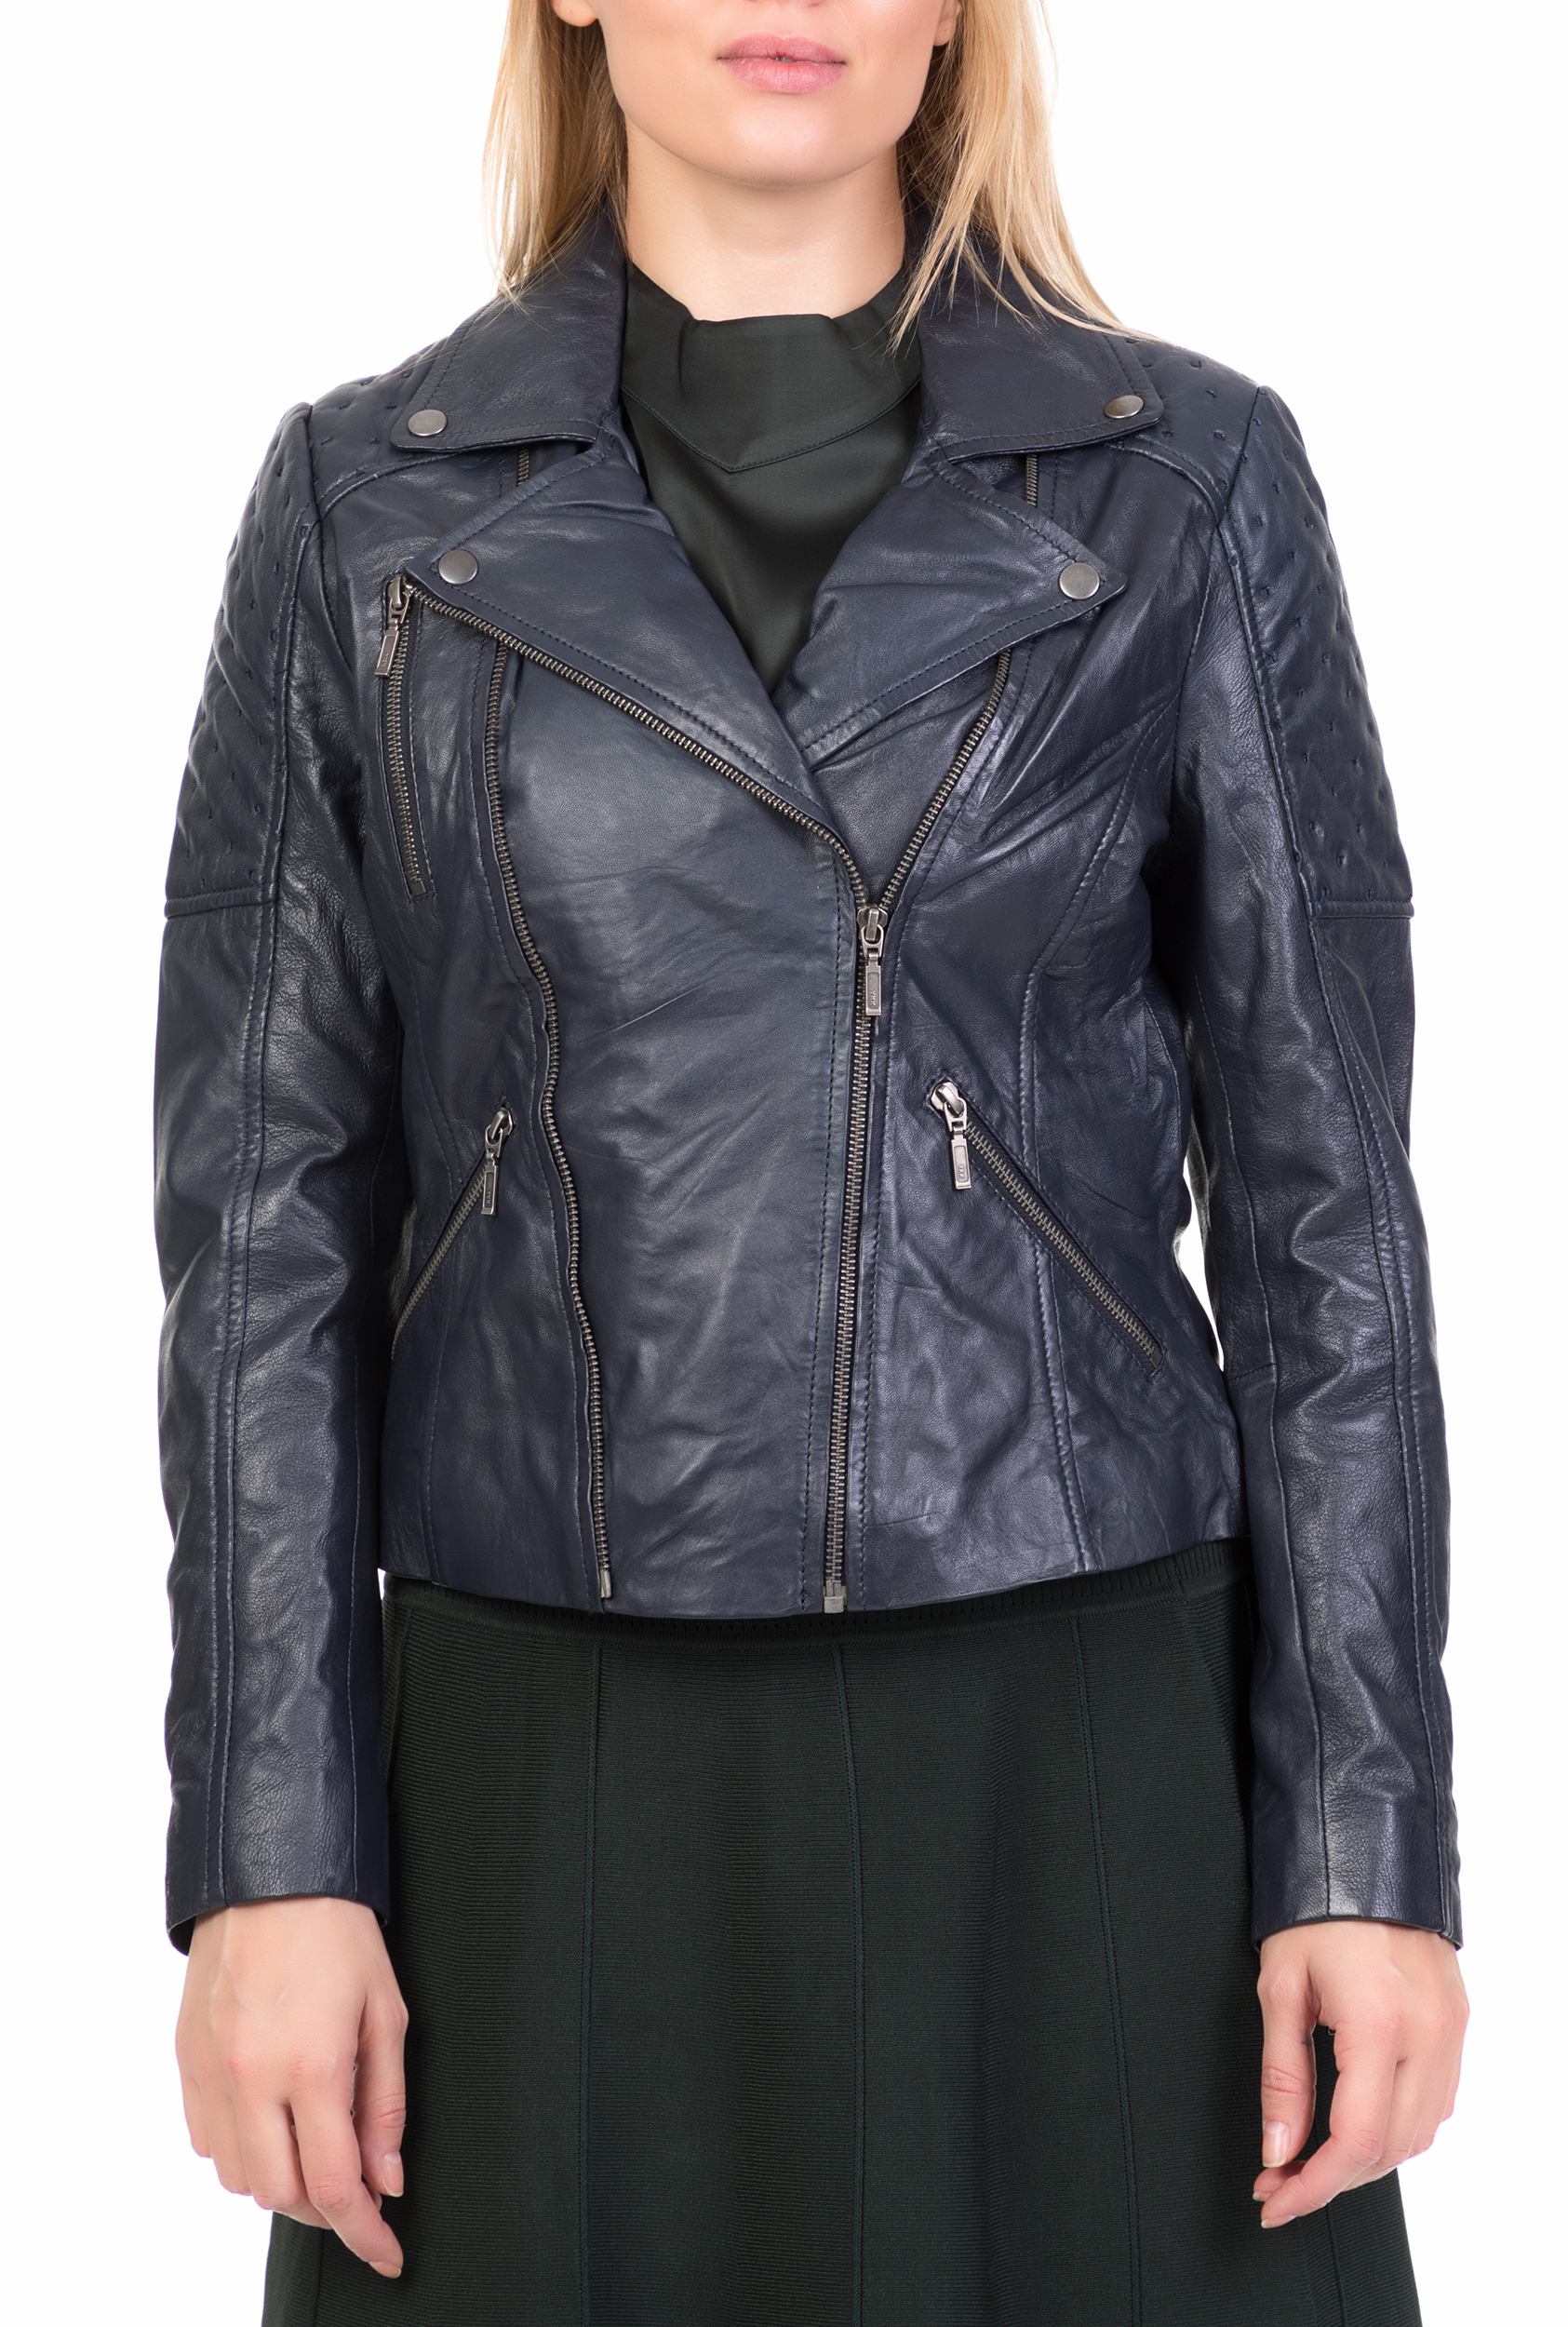 NUMPH – Γυναικείο δερμάτινο jacket BACUPARI NUMPH σκούρο μπλε